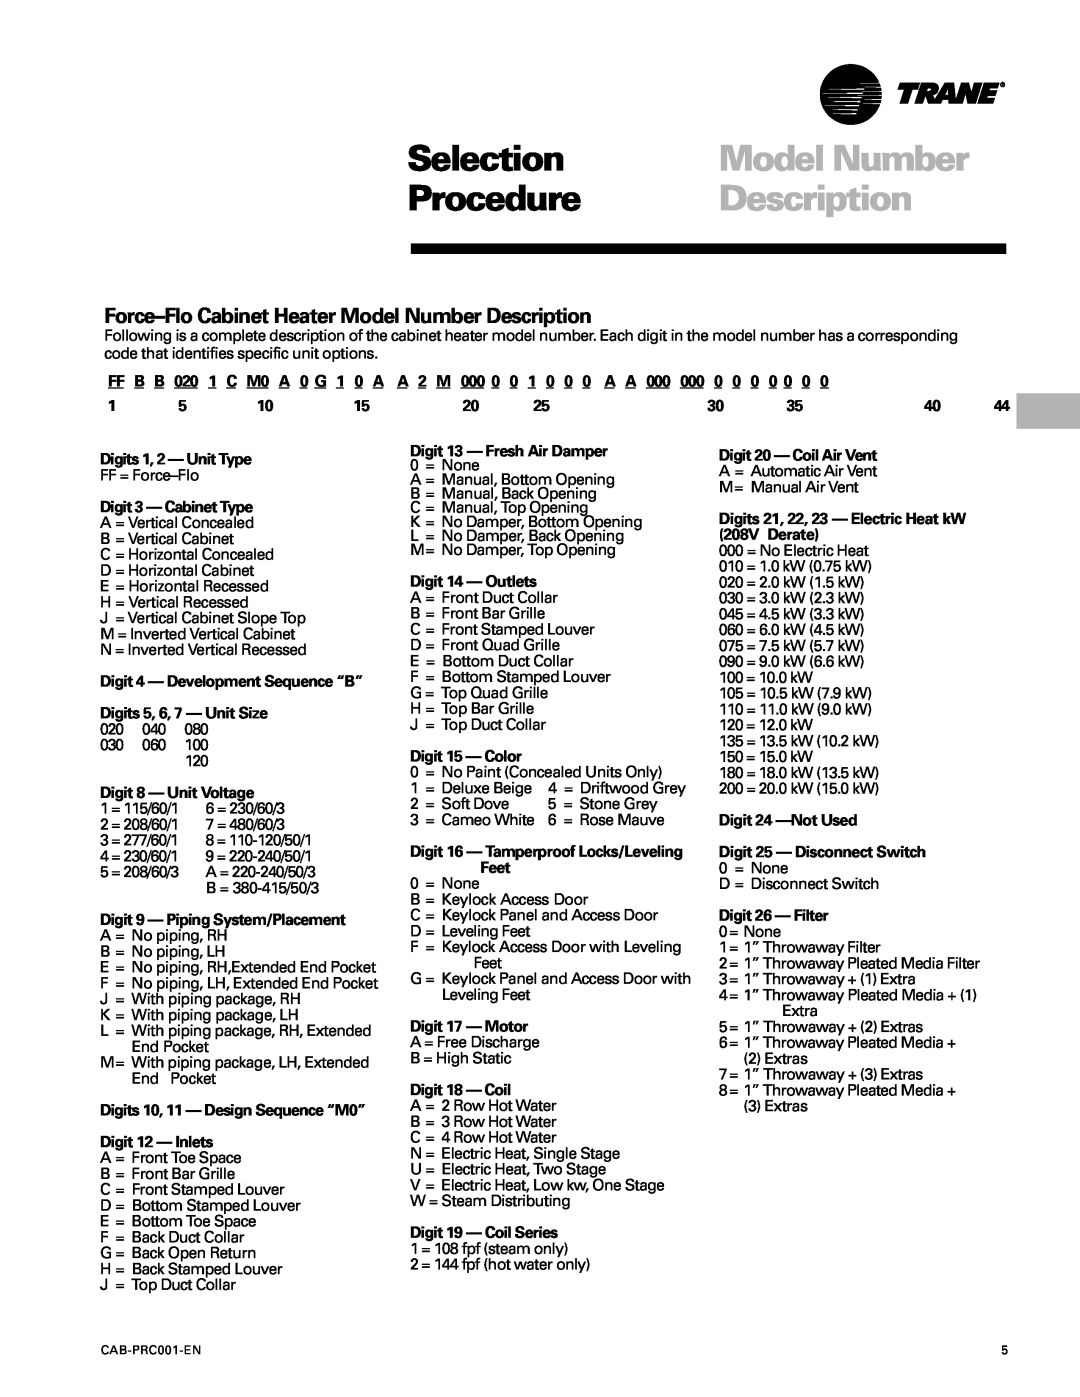 Trane CAB-PRC001-EN manual Selection, Procedure, Force-FloCabinet Heater Model Number Description 